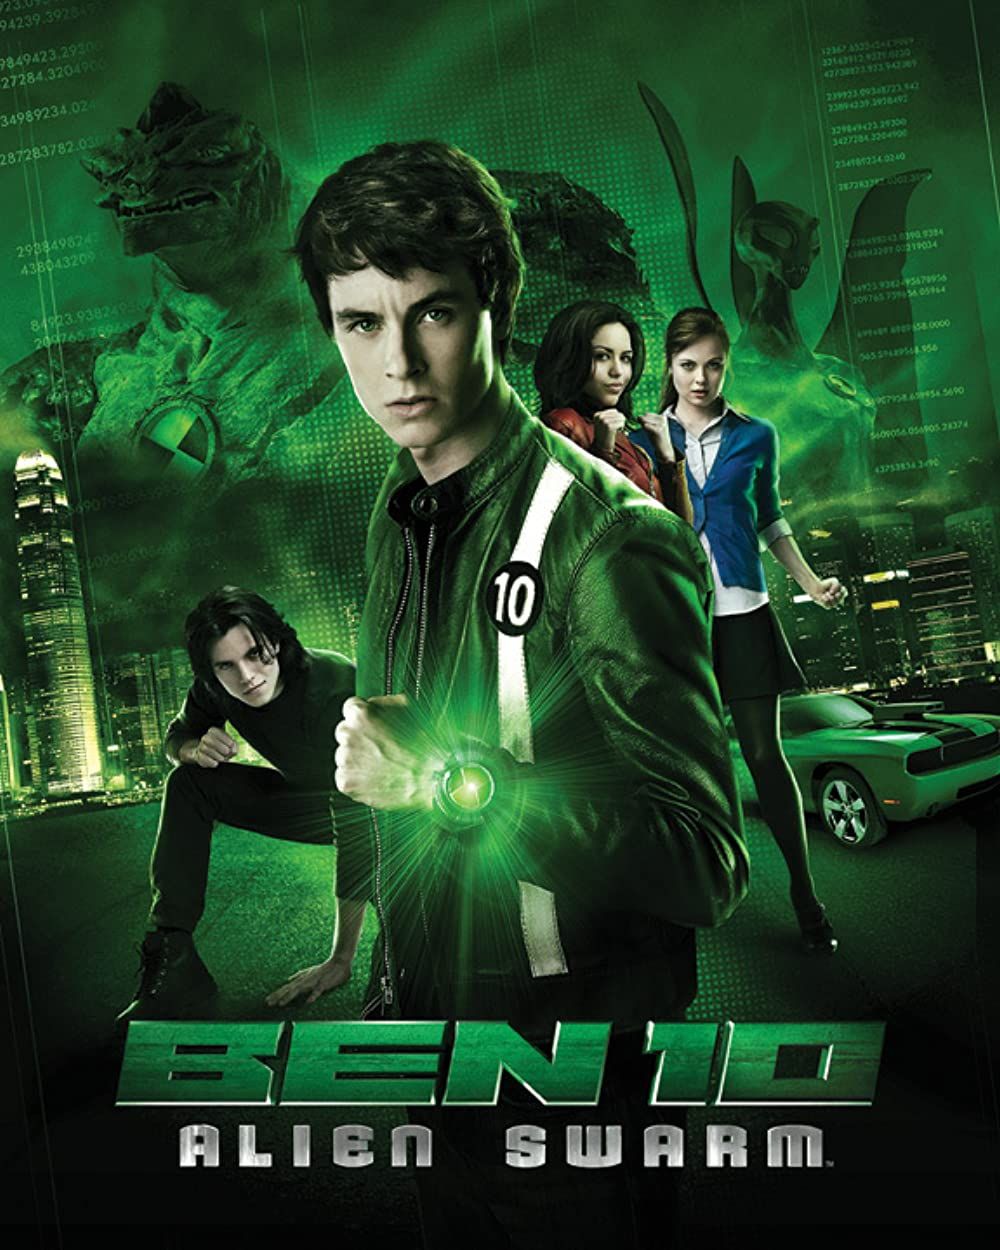 Ben 10 Alien Swarm (2009) Hindi Dubbed BluRay download full movie